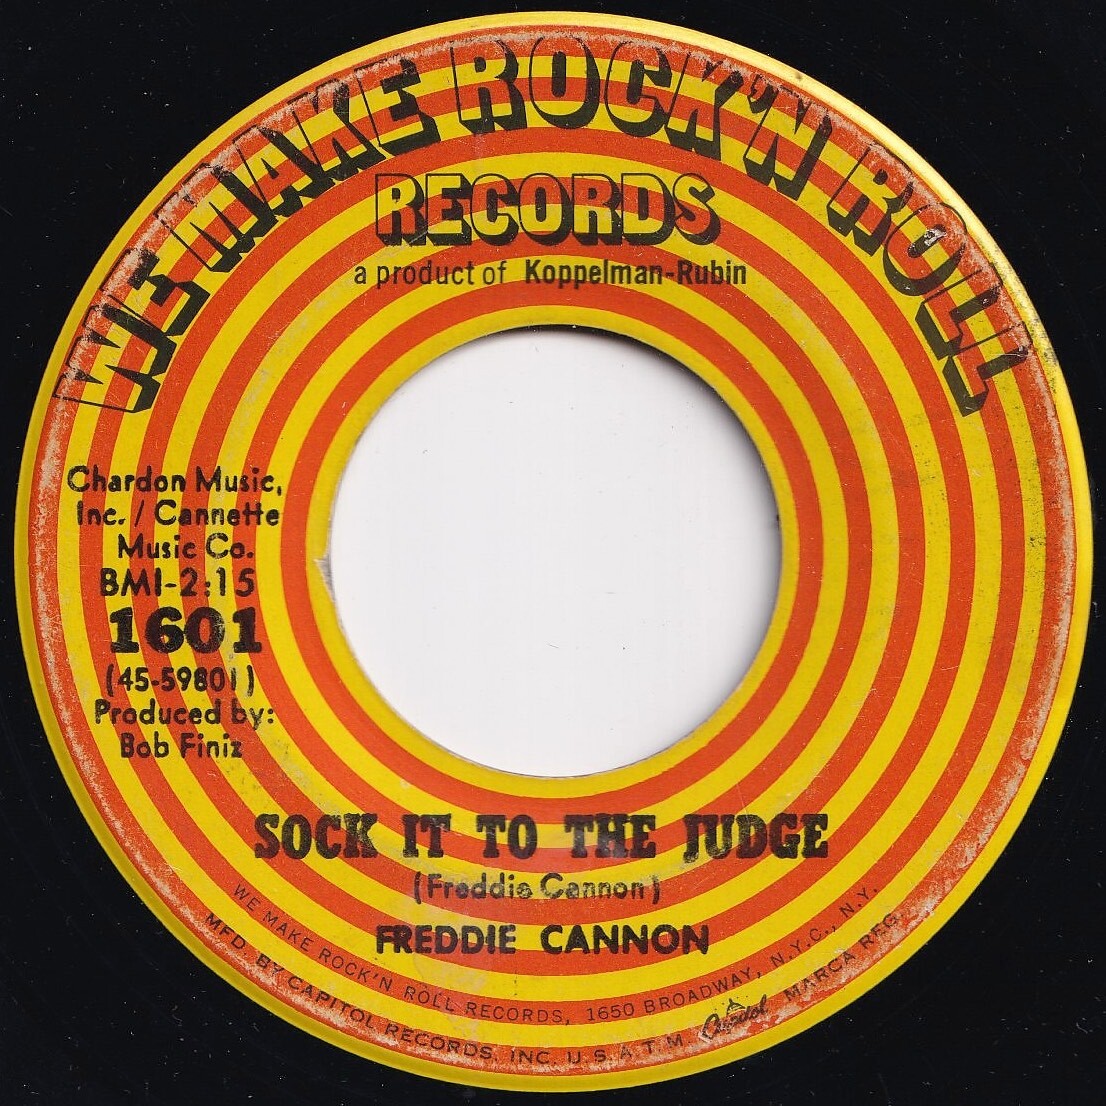 Freddie Cannon Rock Around The Clock / Sock It To The Judge We Make Rock'n Roll US 1601 206658 R&B R&R レコード 7インチ 45_画像2